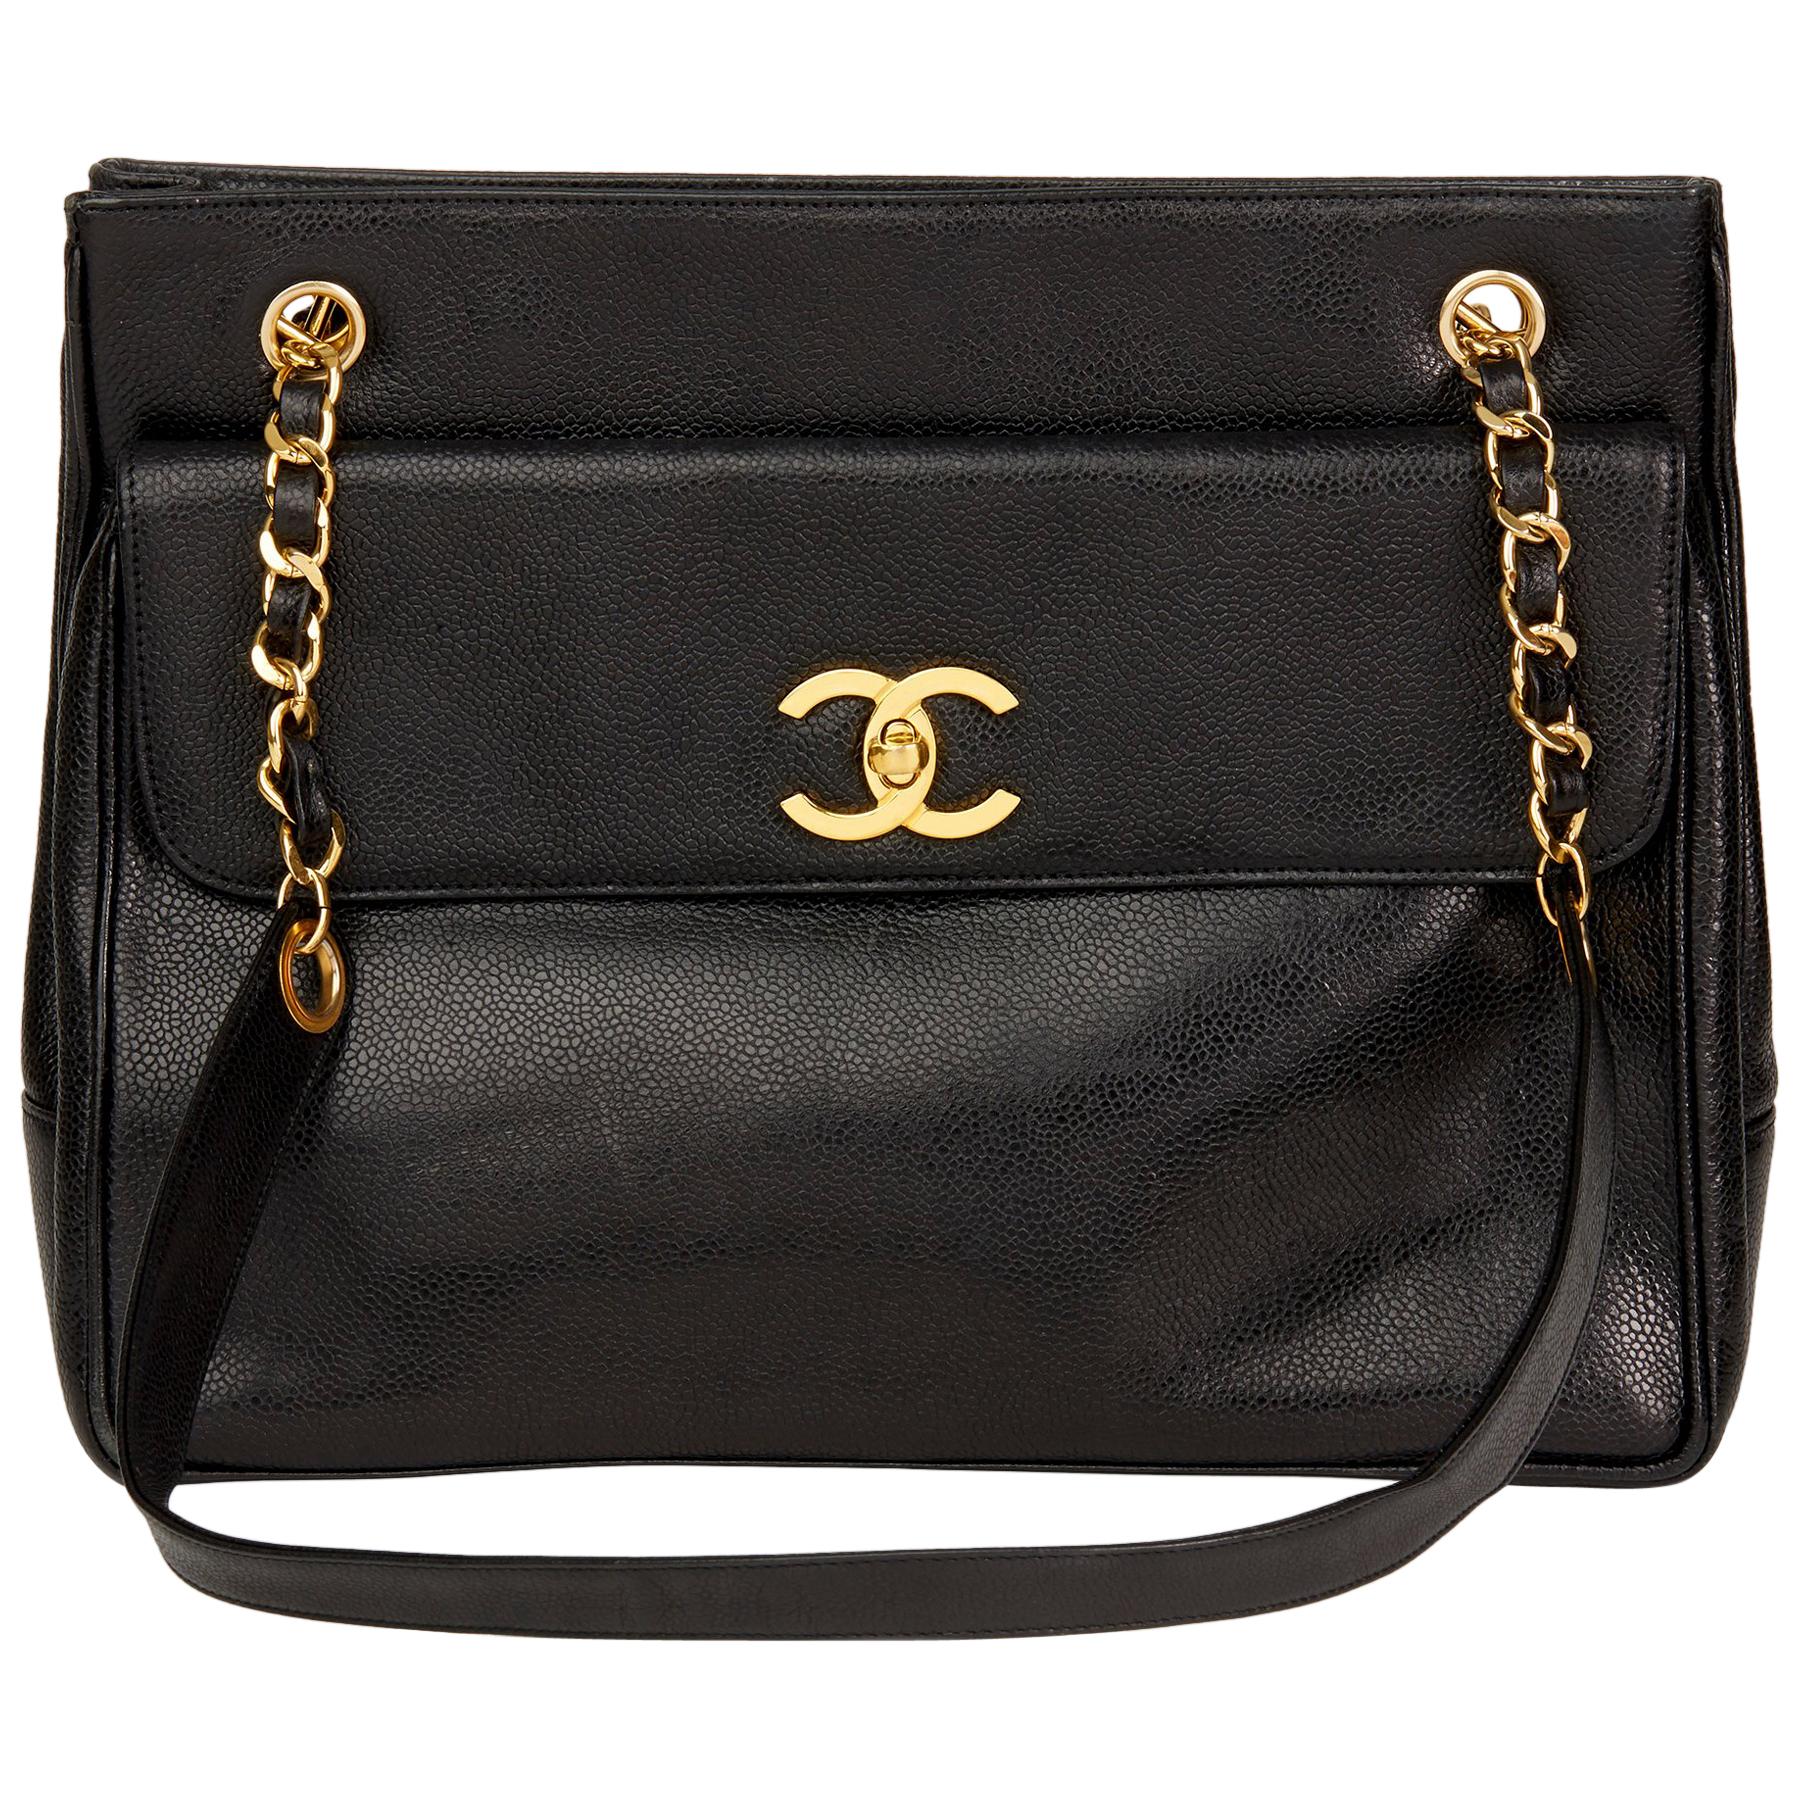 1991 Chanel Black Caviar Leather Vintage Classic Shoulder Bag